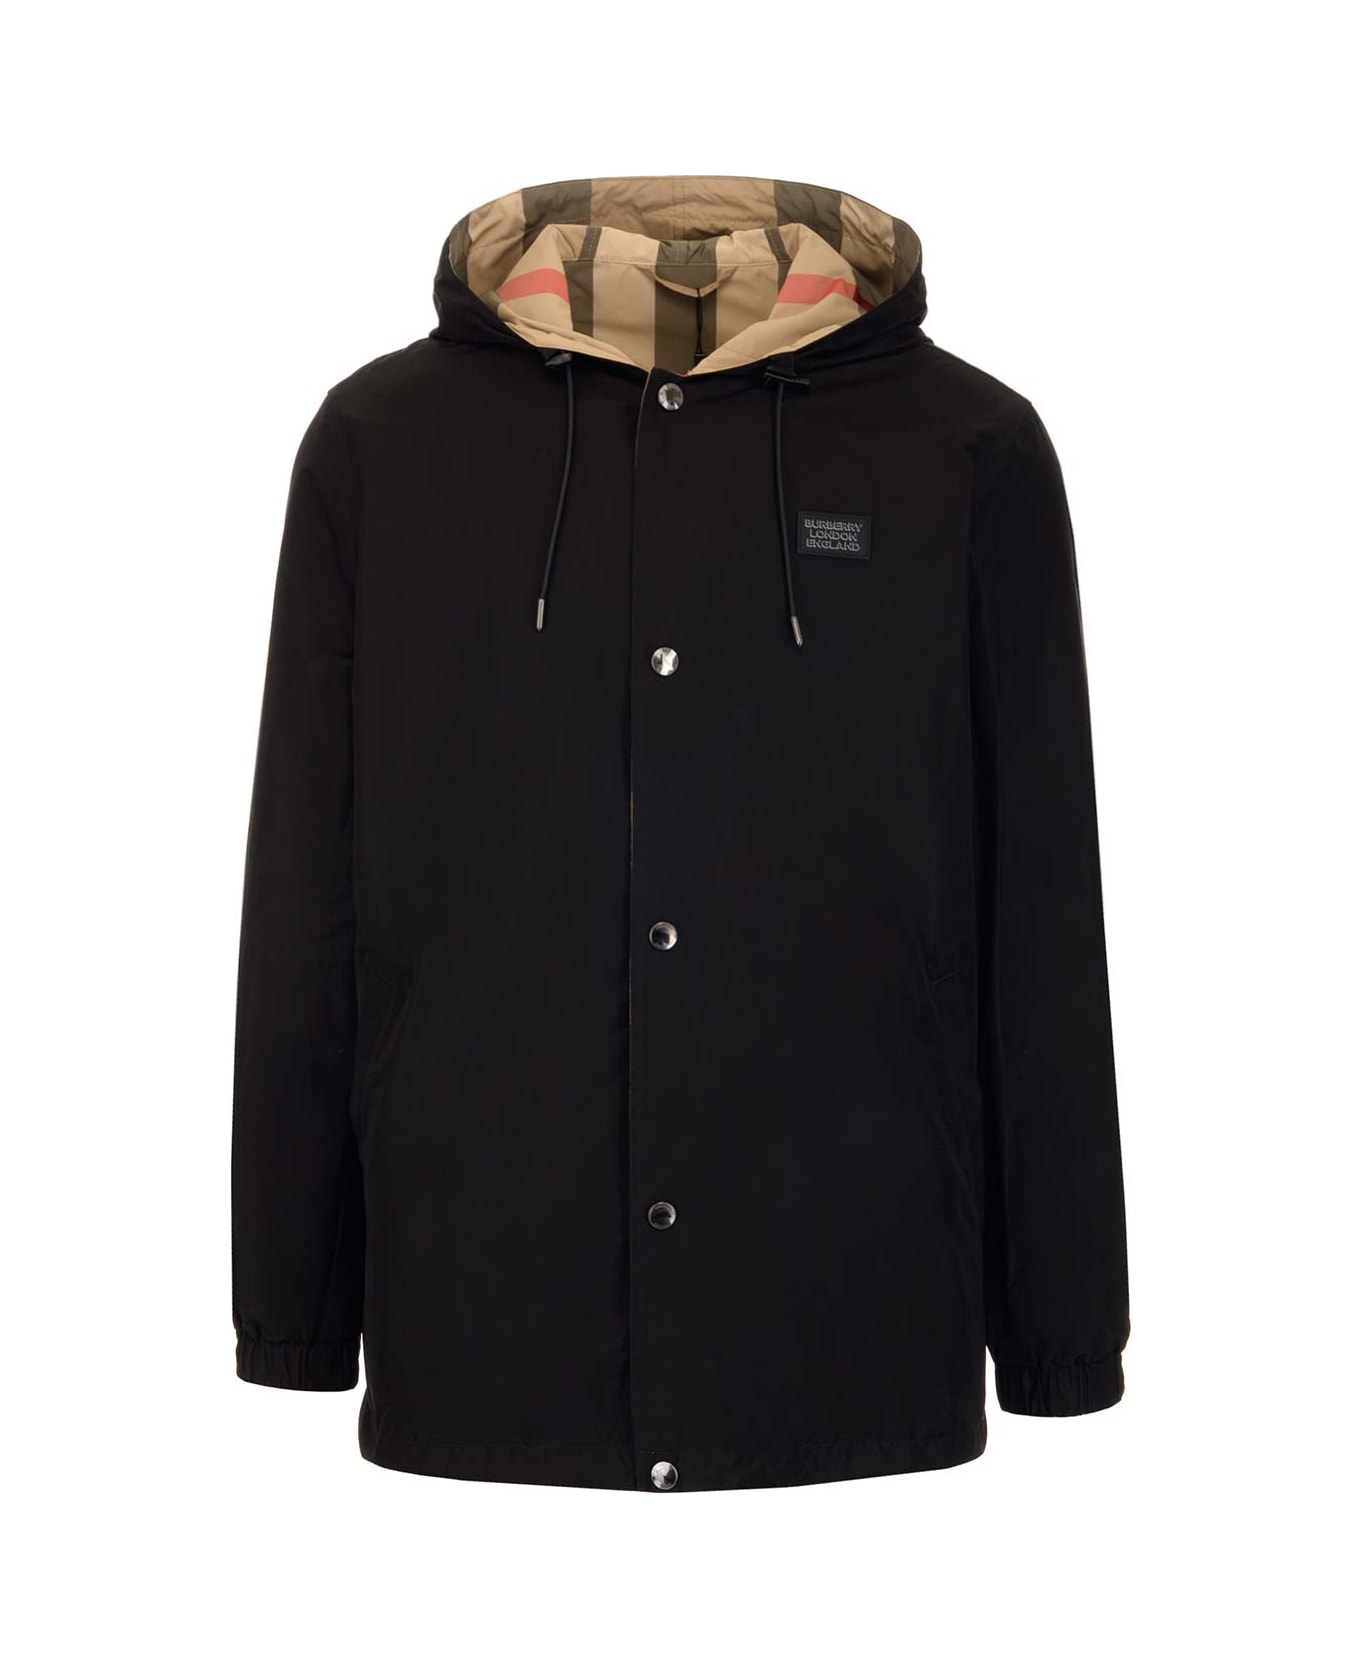 Burberry Reversible Jacket - Black コート